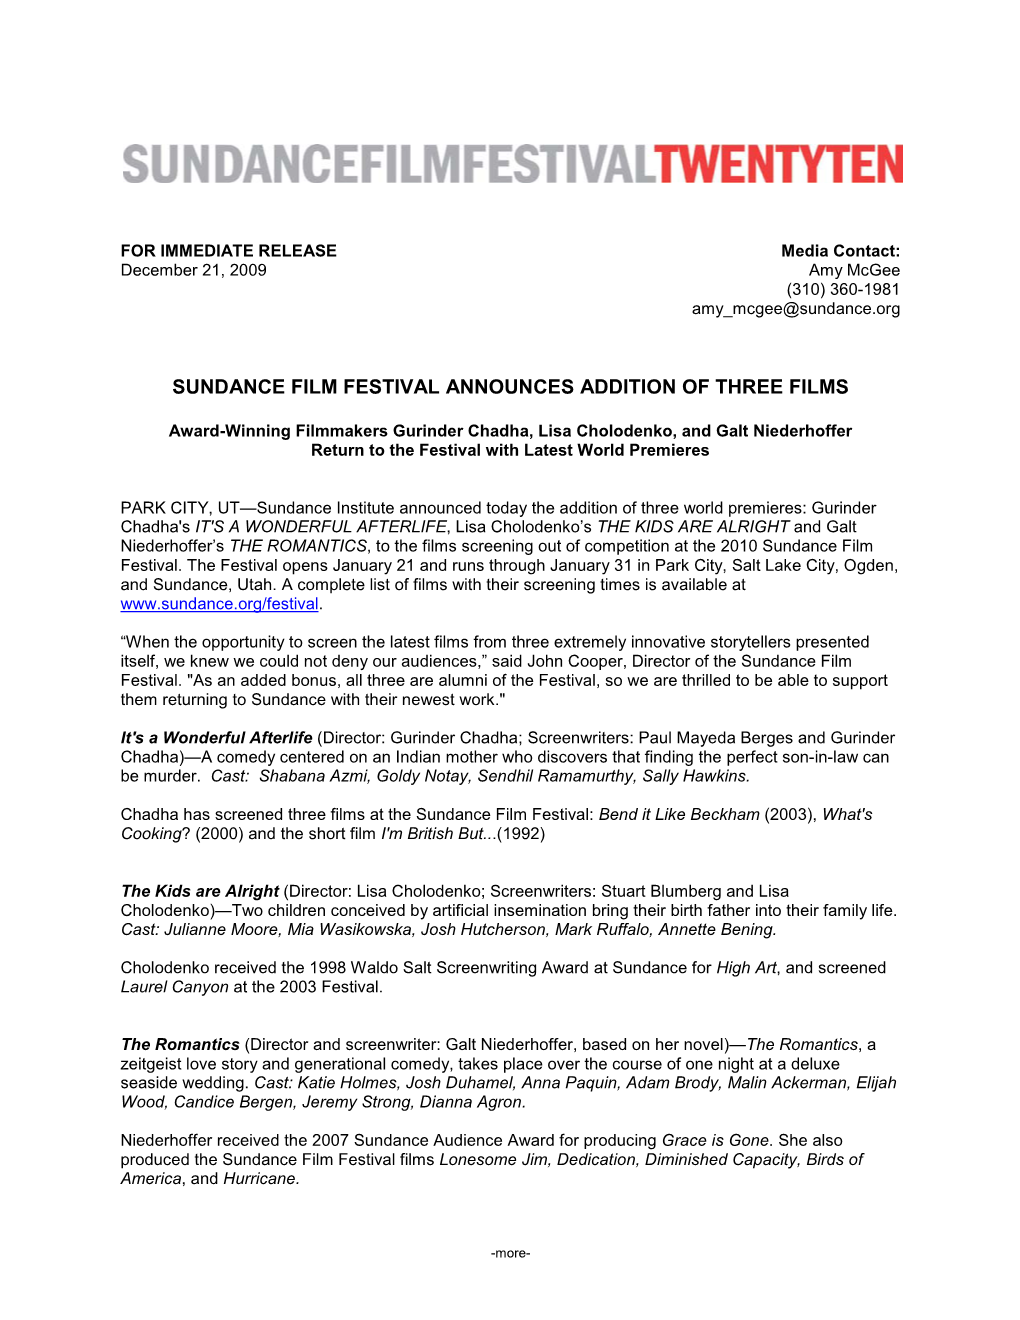 Sundance Film Festival Announces Addition of Three Films